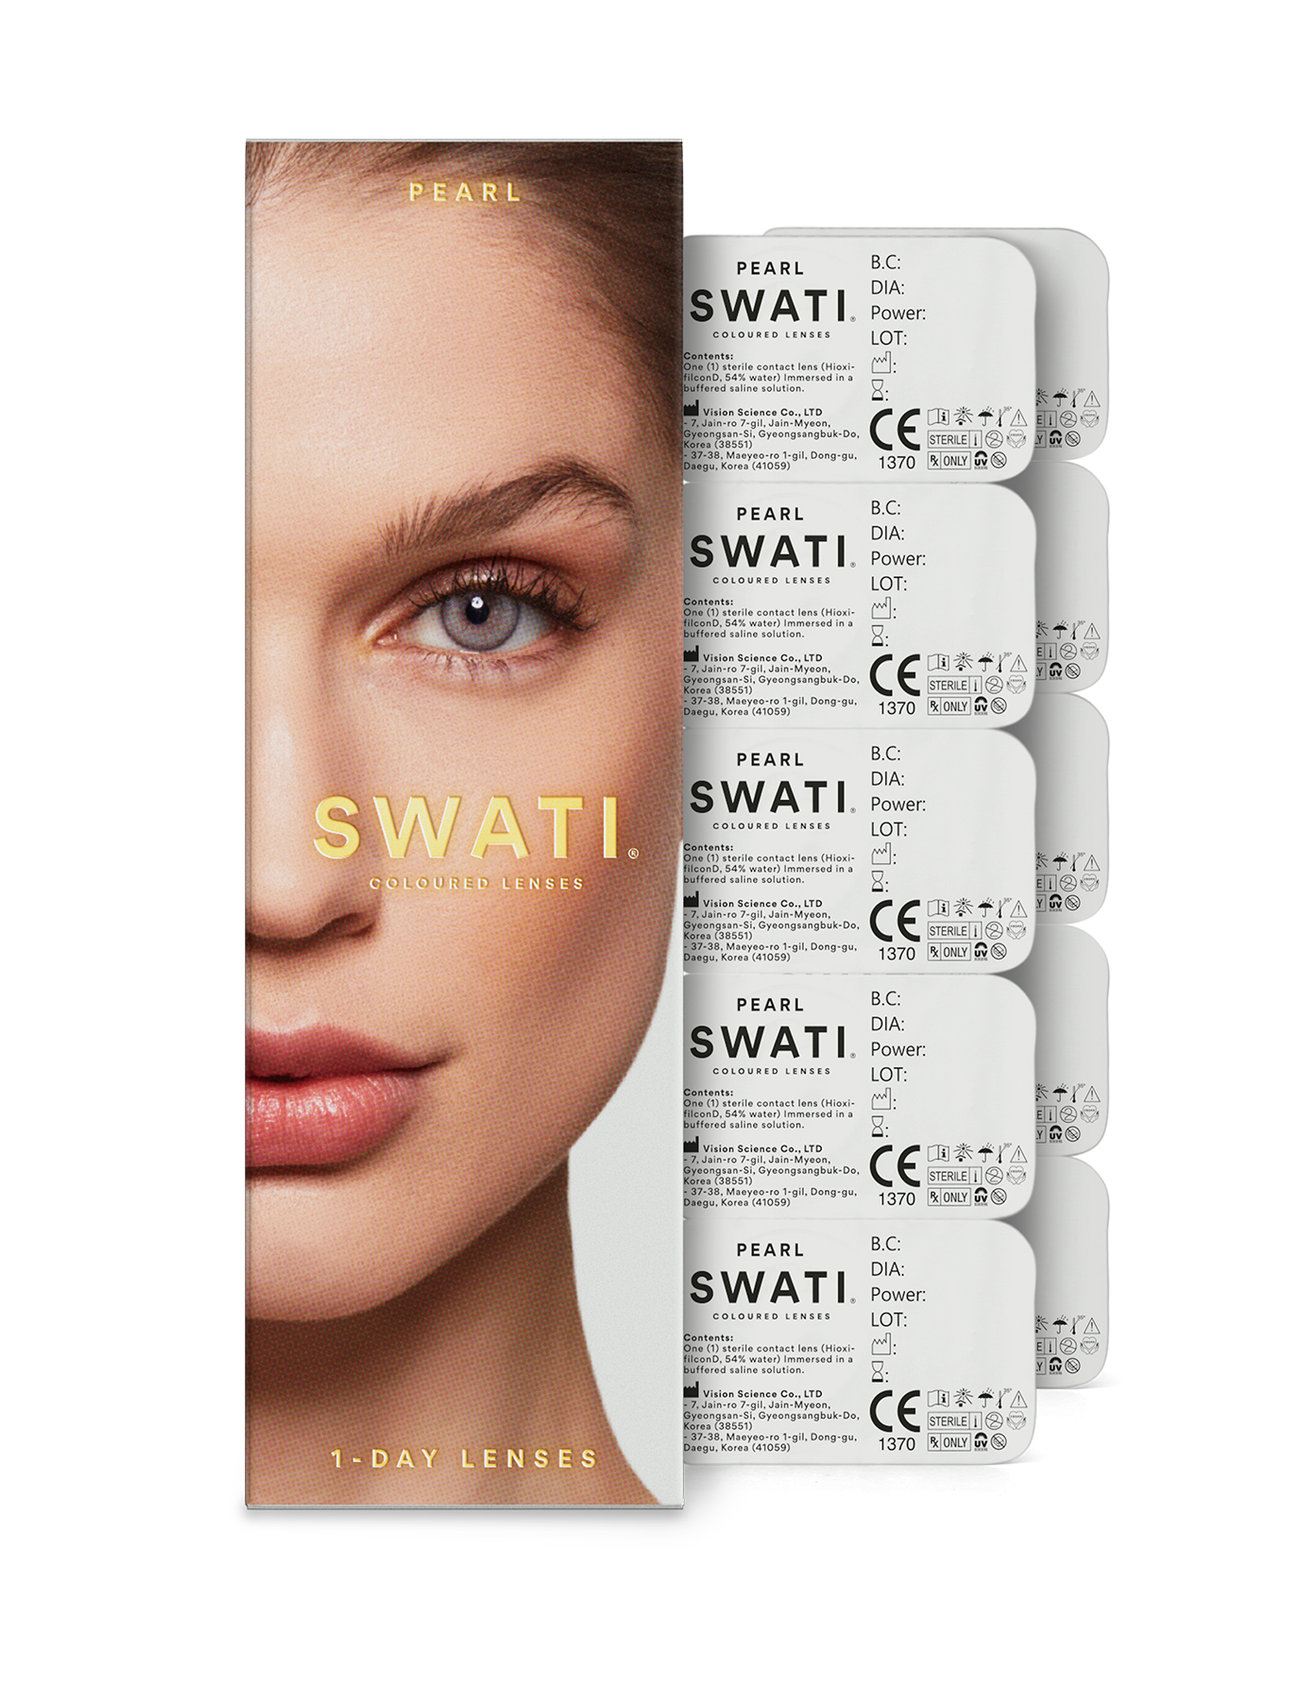 Pearl 1-Day Lenses Beauty Women Makeup Eyes Coloured Lenses SWATI Cosmetics